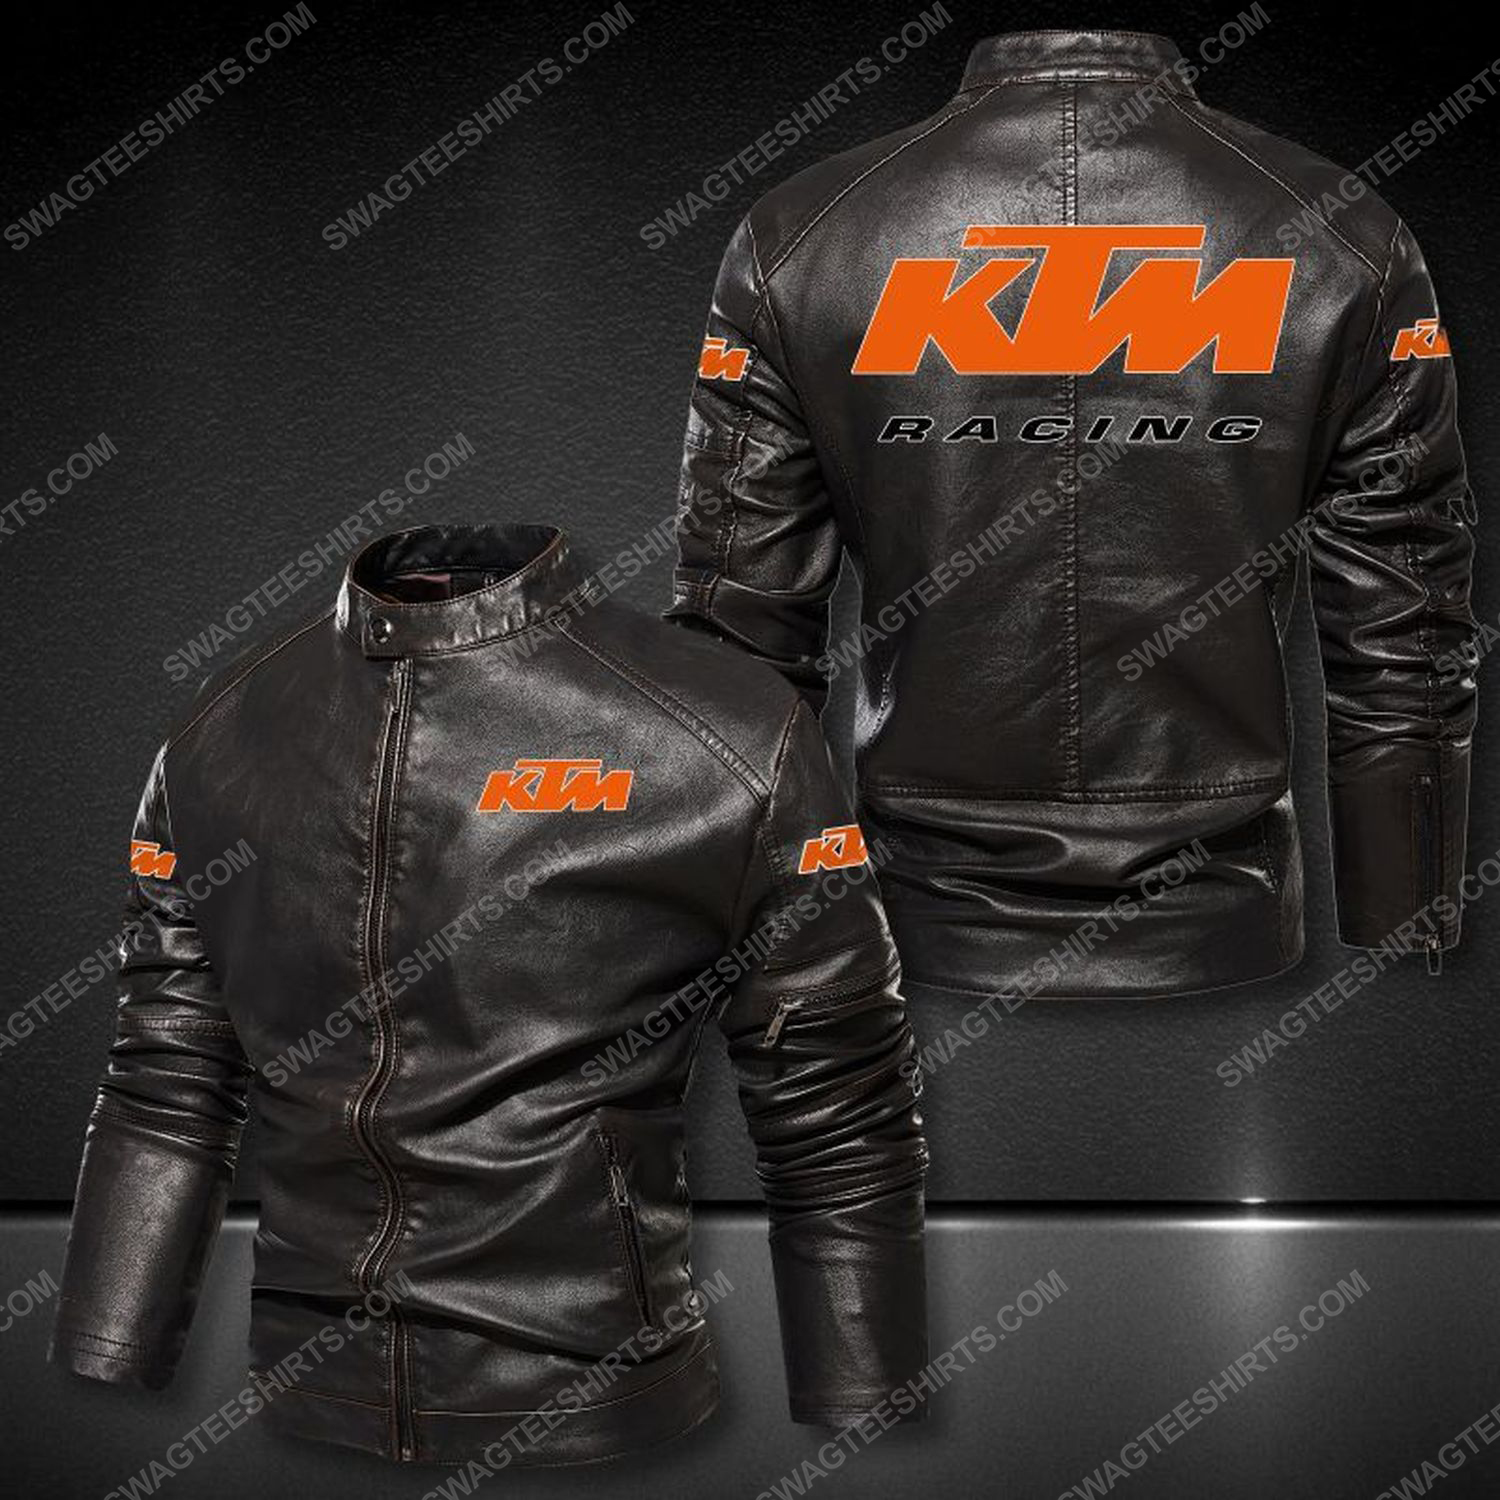 KTM sportmotorcycle ag sports leather jacket 1 - Copy